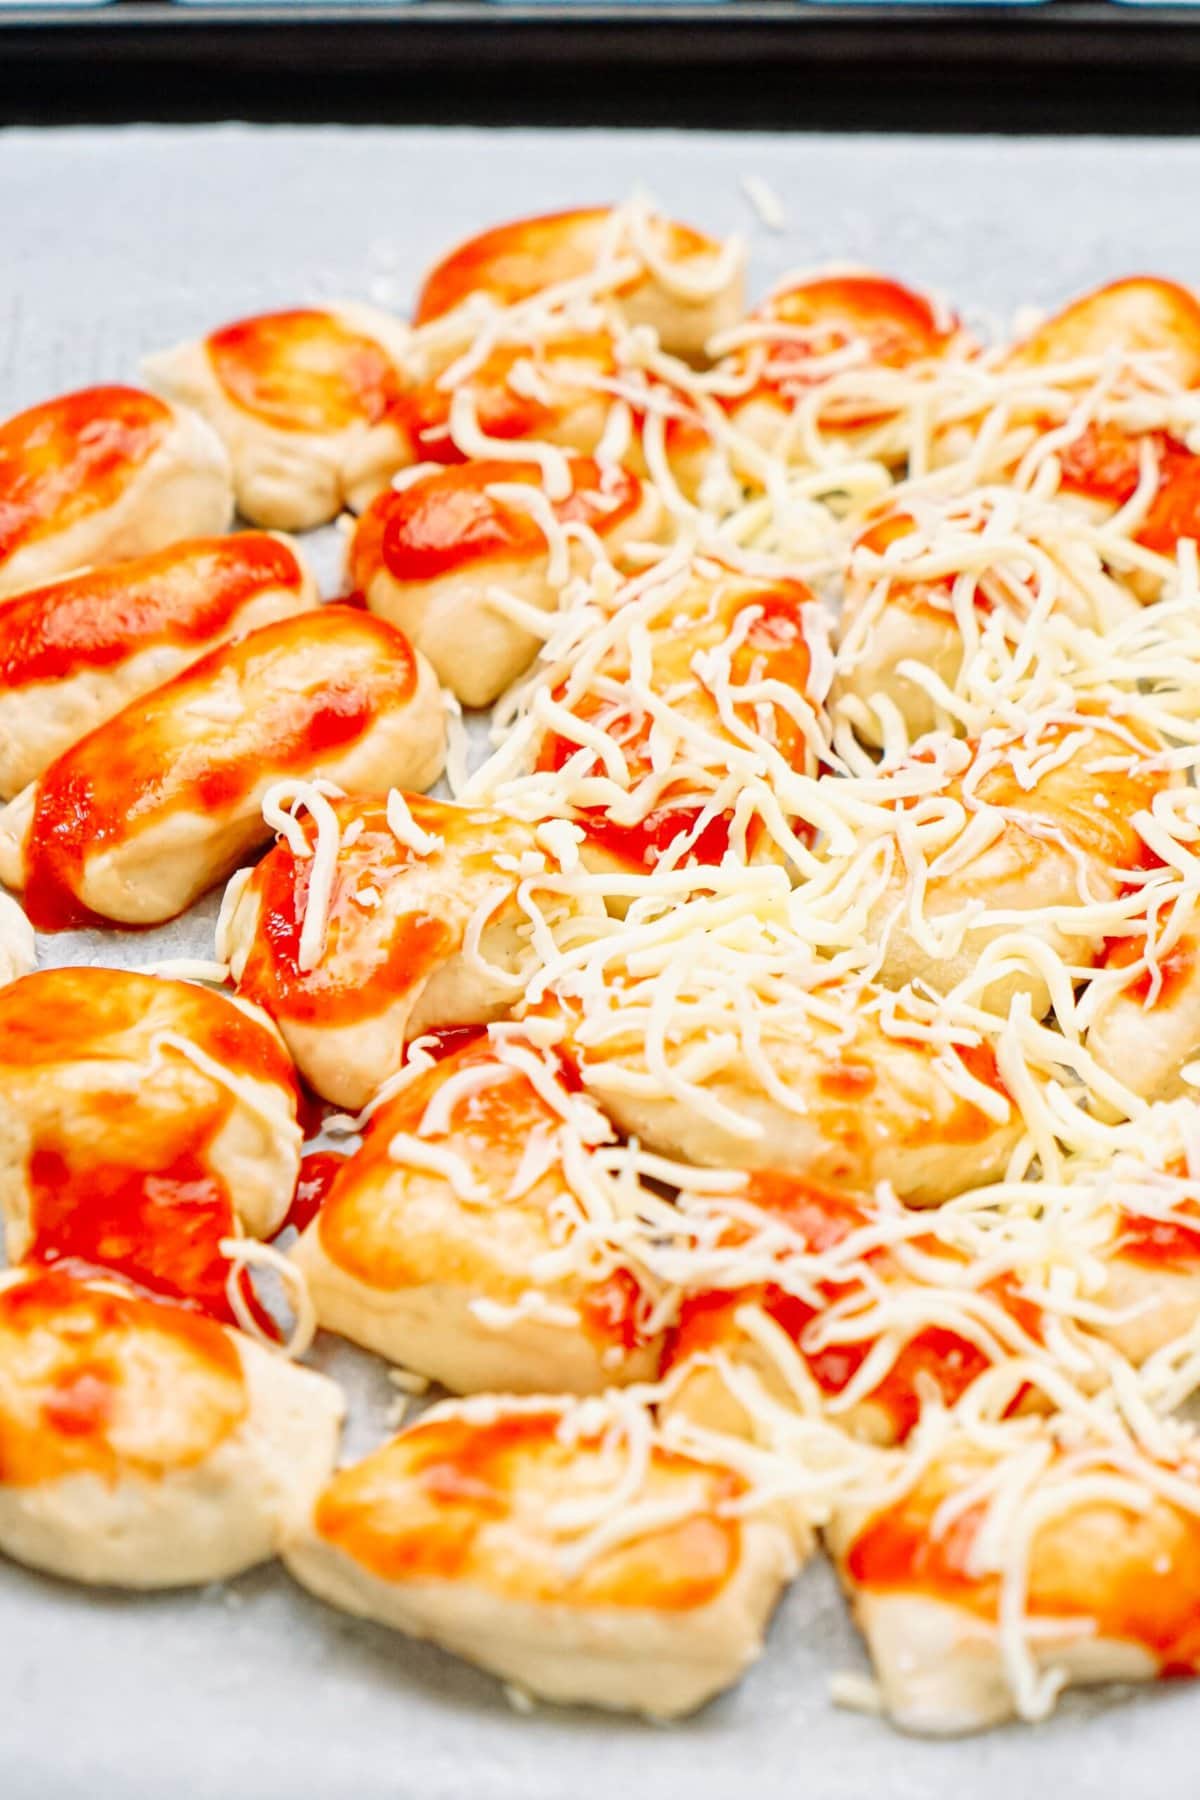 shredded mozzarella sprinkled onto pizza 